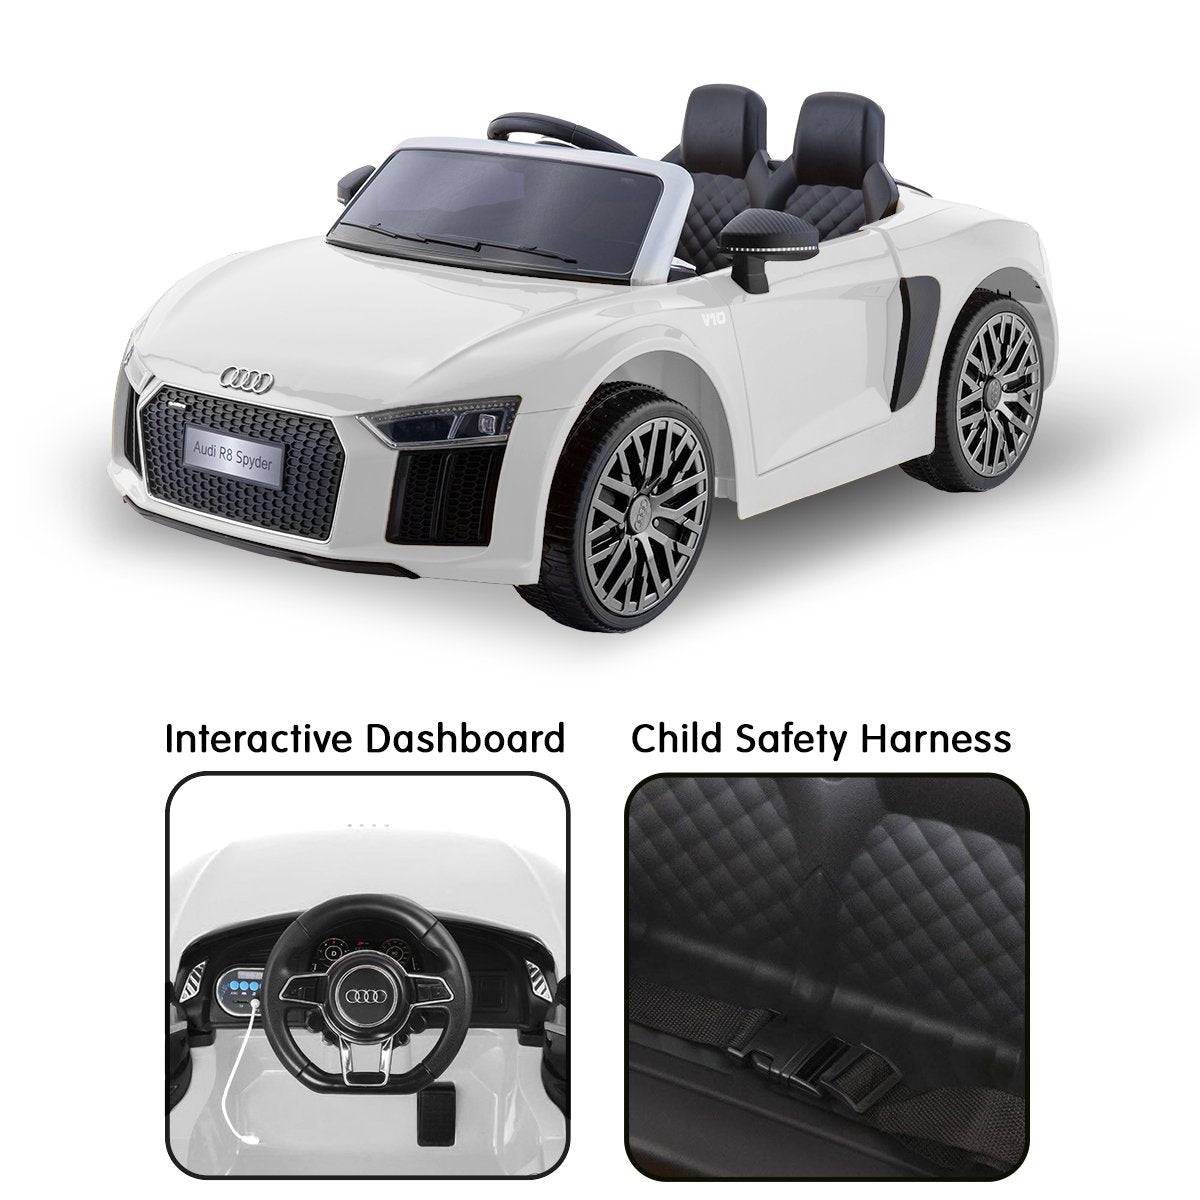 Spyder Audi Licensed Kids Electric Ride On Car Remote Control - White